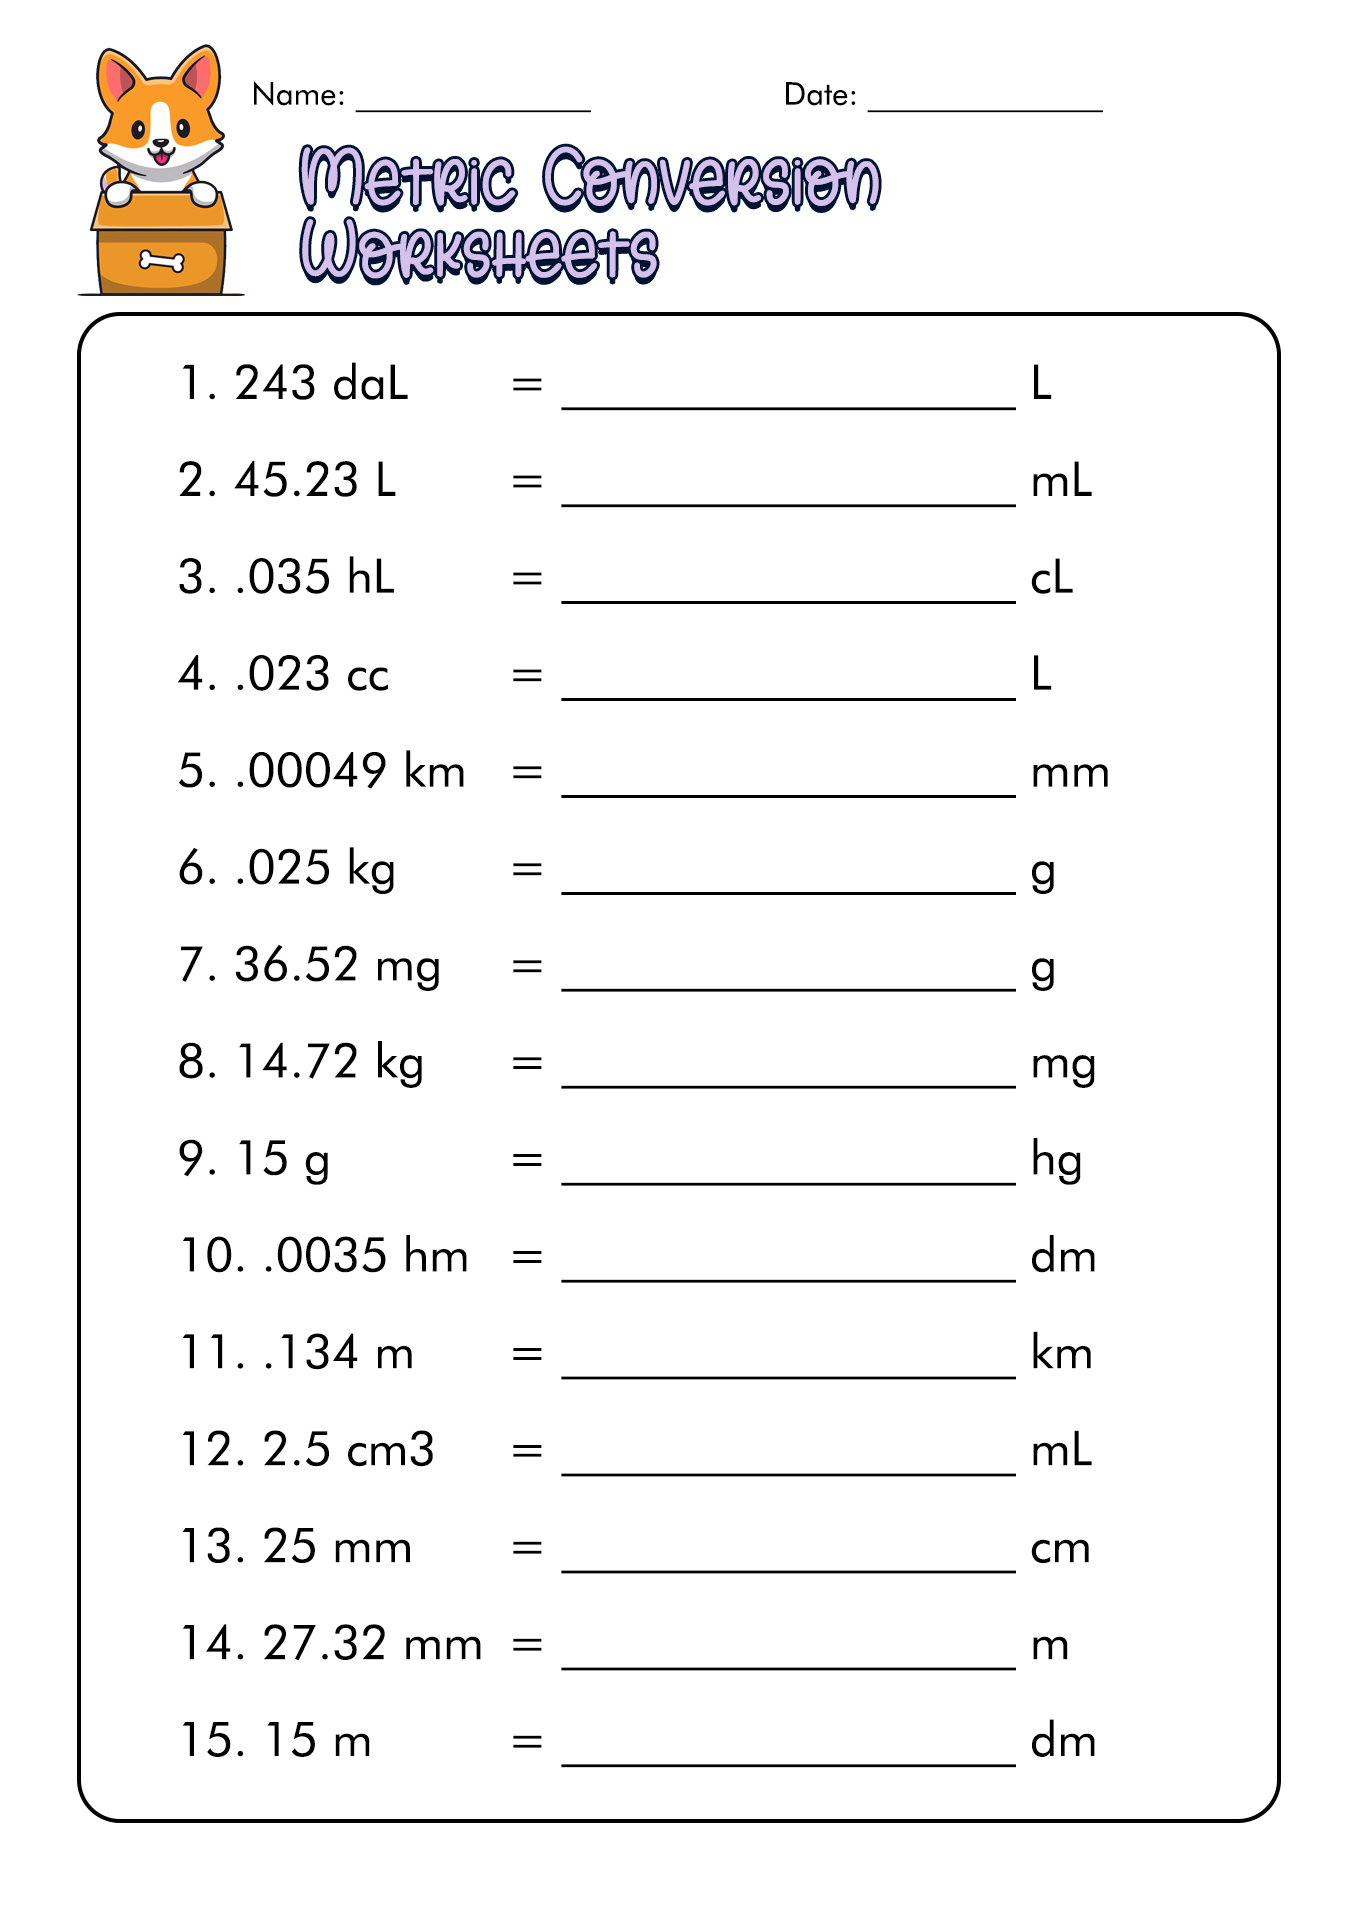 12-best-images-of-measuring-units-worksheet-answer-key-metric-unit-conversion-worksheet